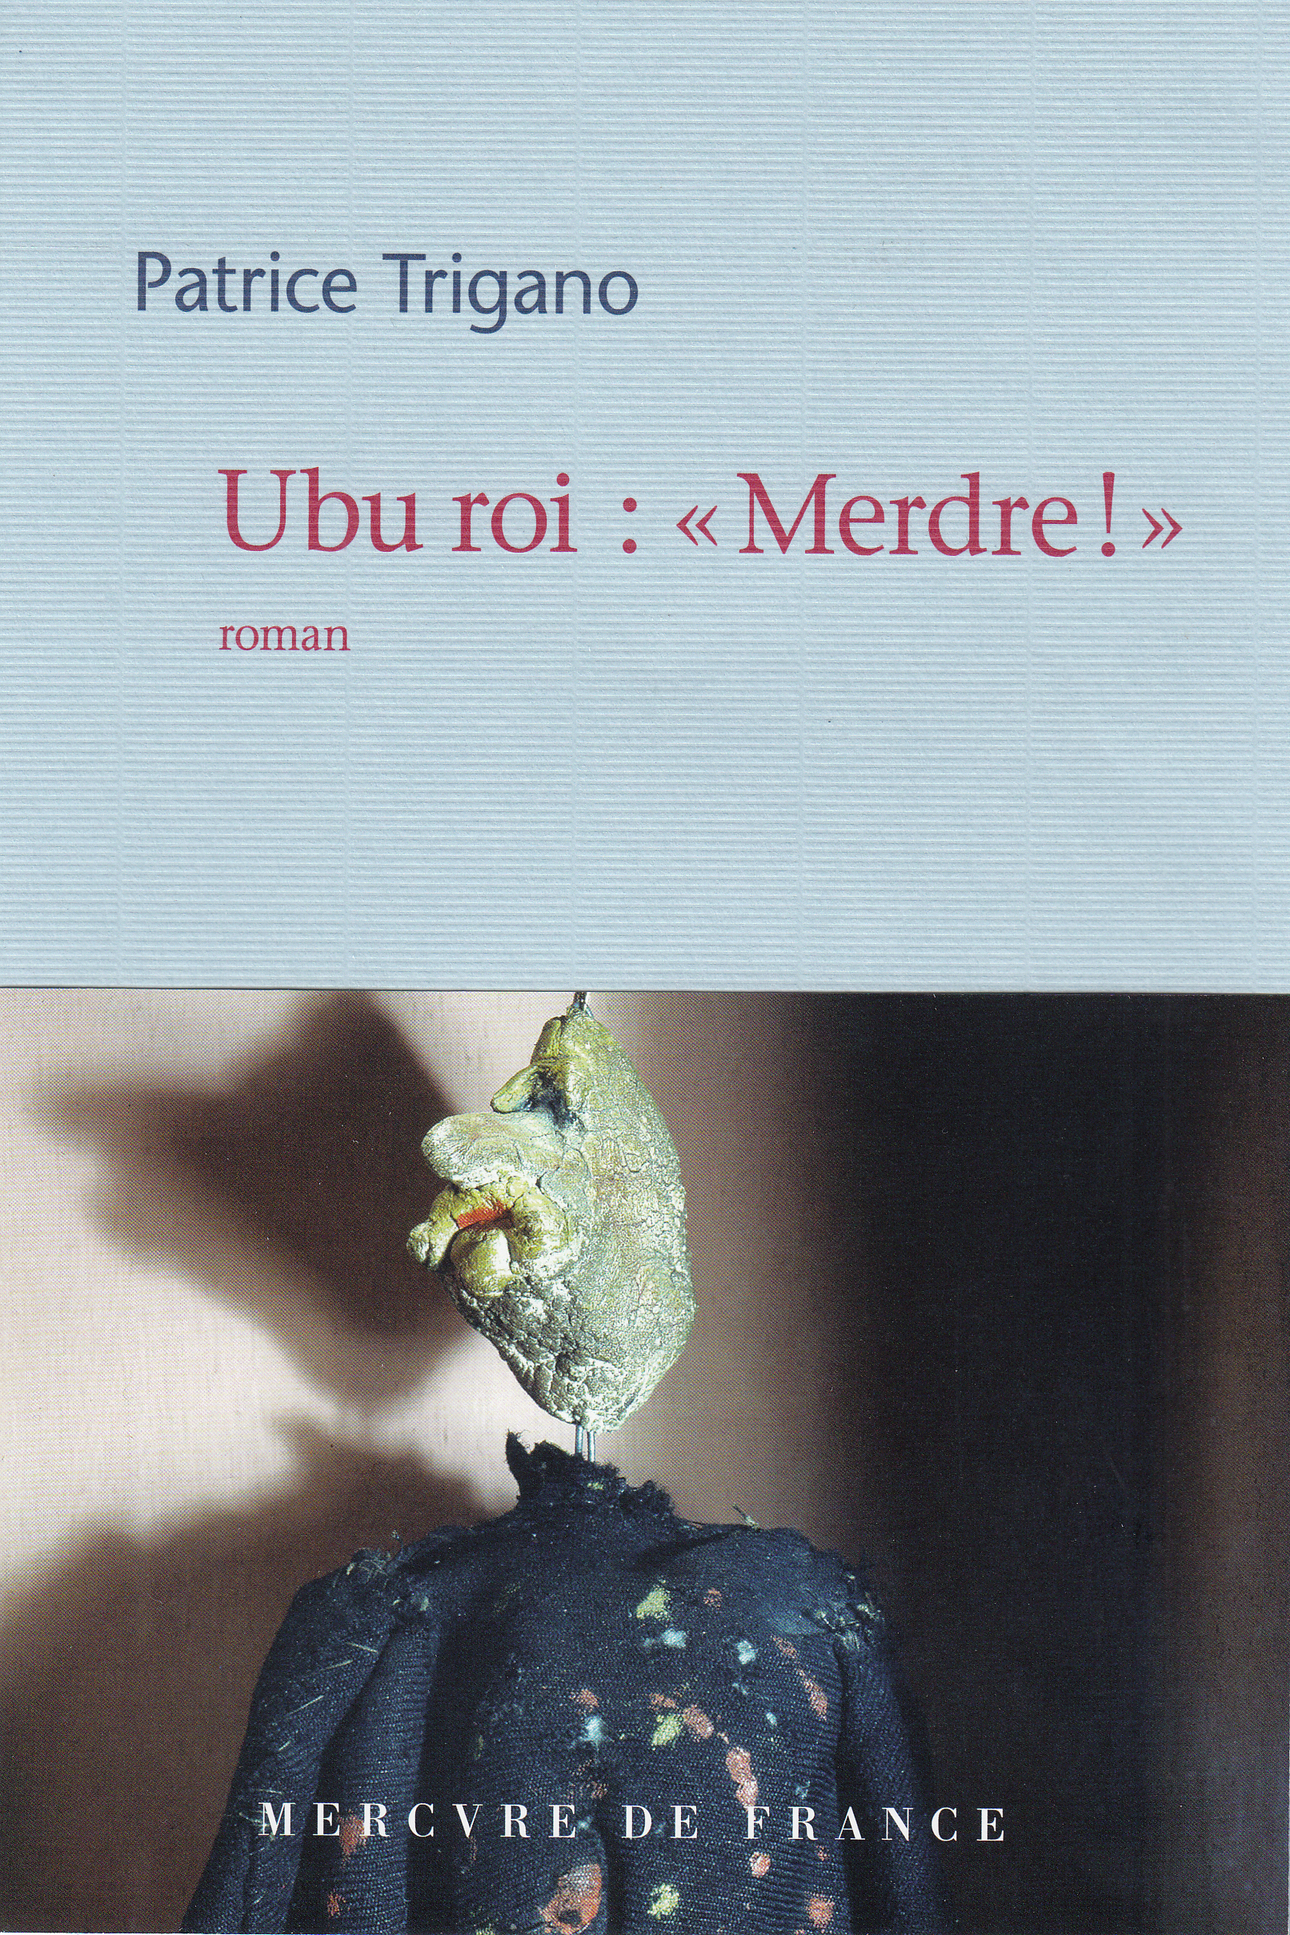 Ubu roi : "Merdre !" (9782715246638-front-cover)